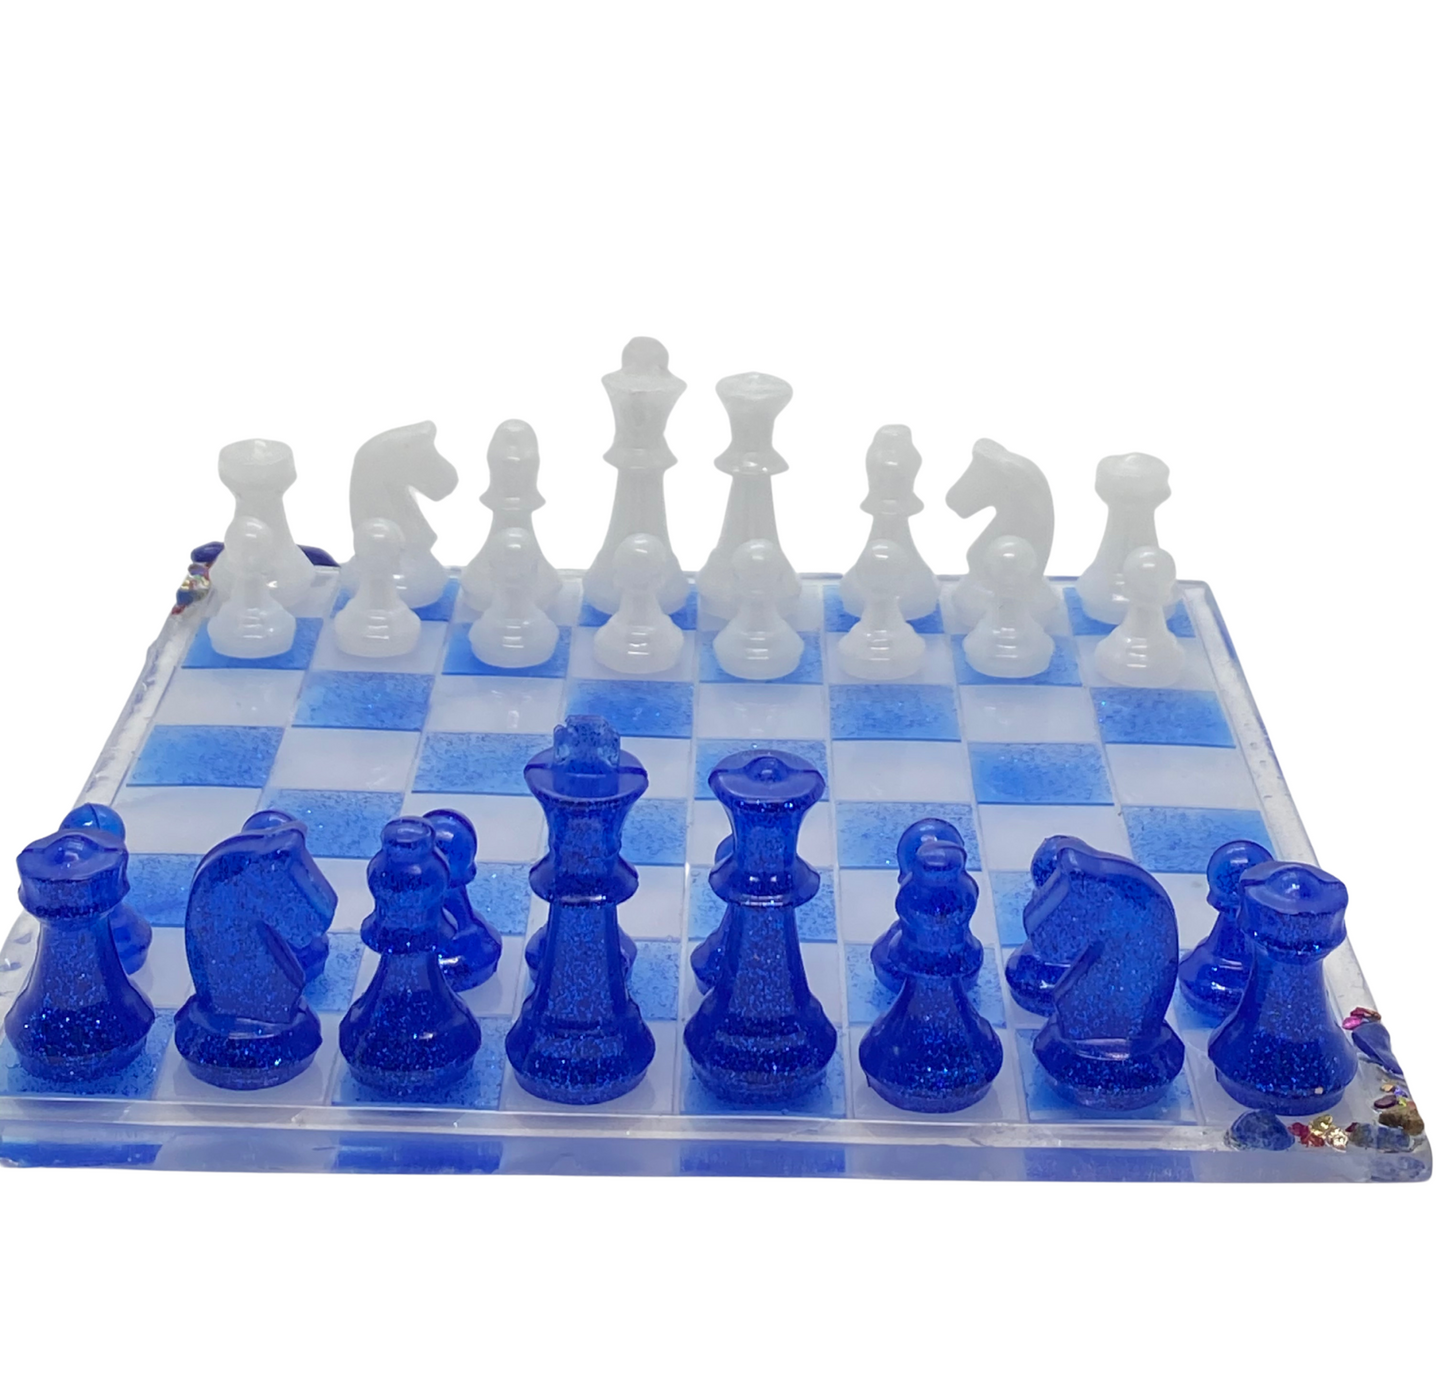 Ocean Resin Handmade Small Chess Board - Nature's Art Lab